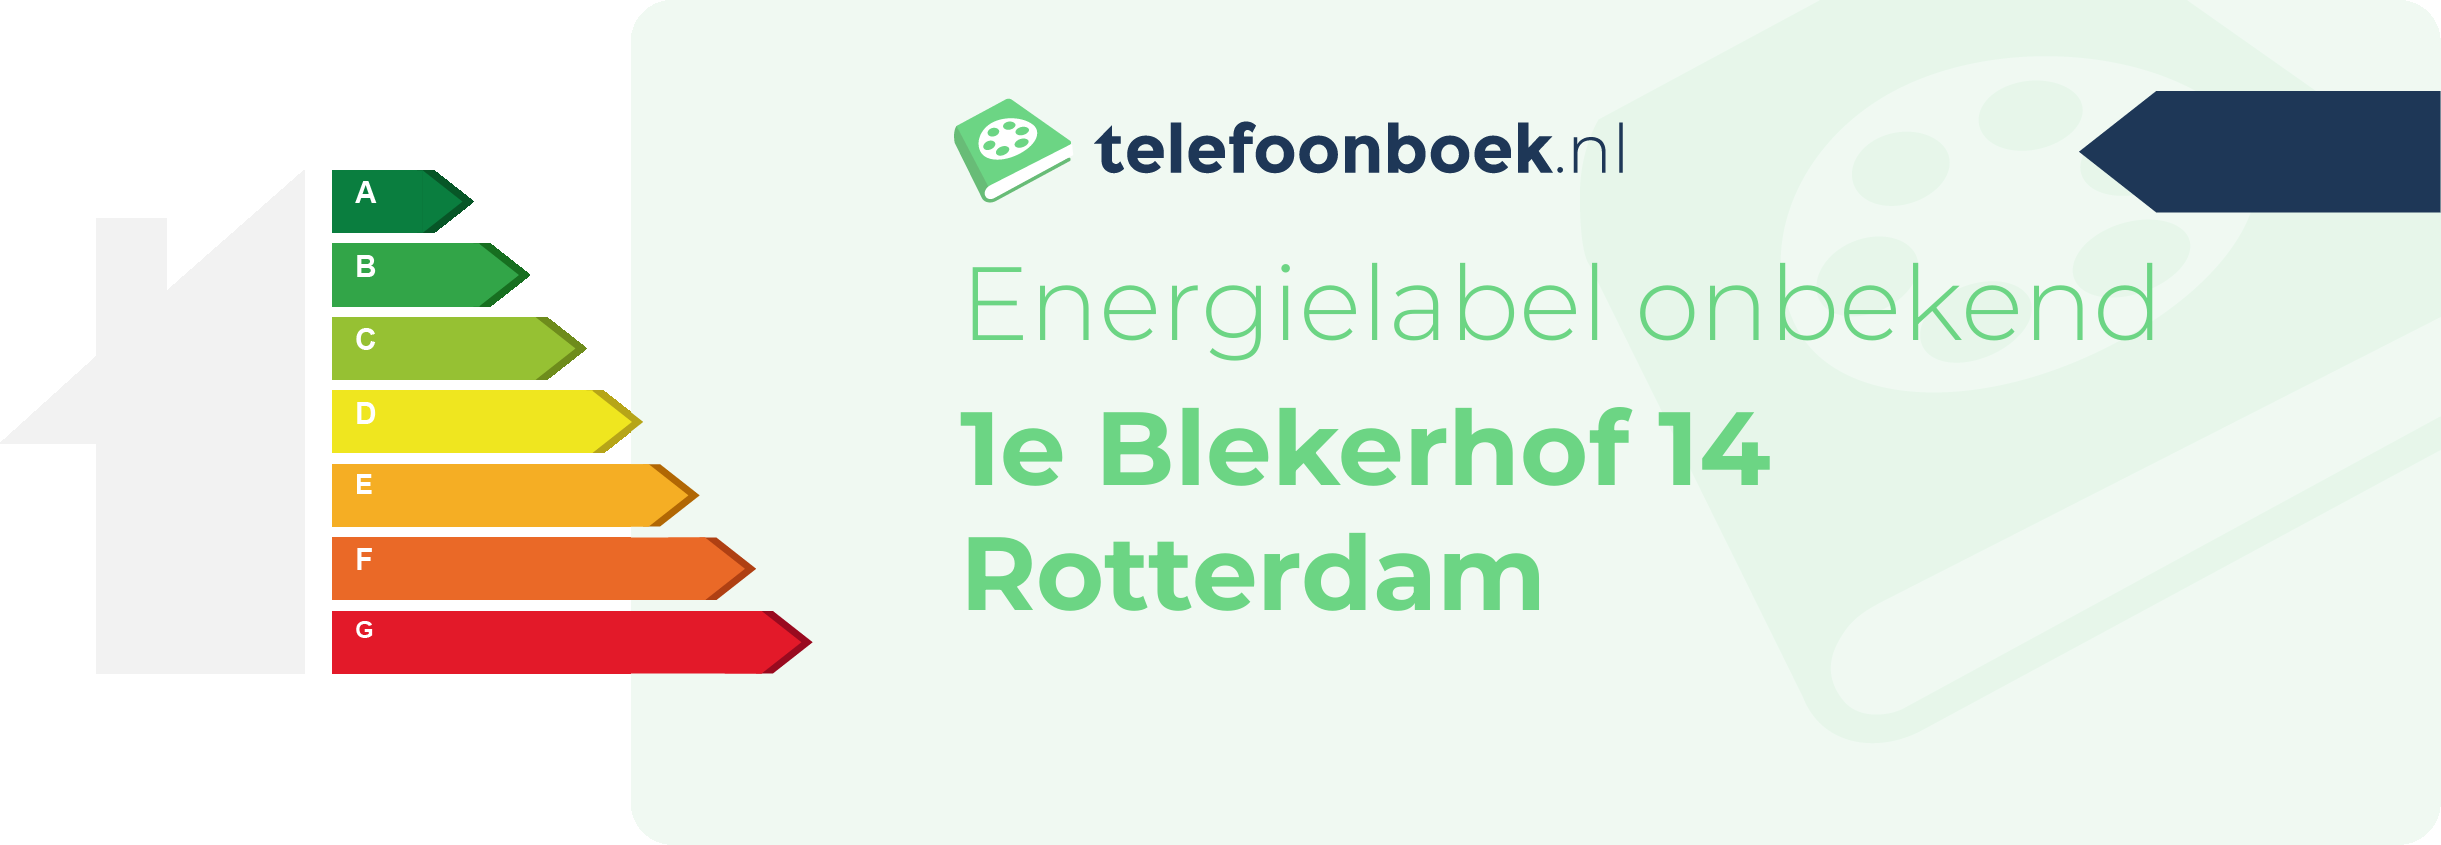 Energielabel 1e Blekerhof 14 Rotterdam